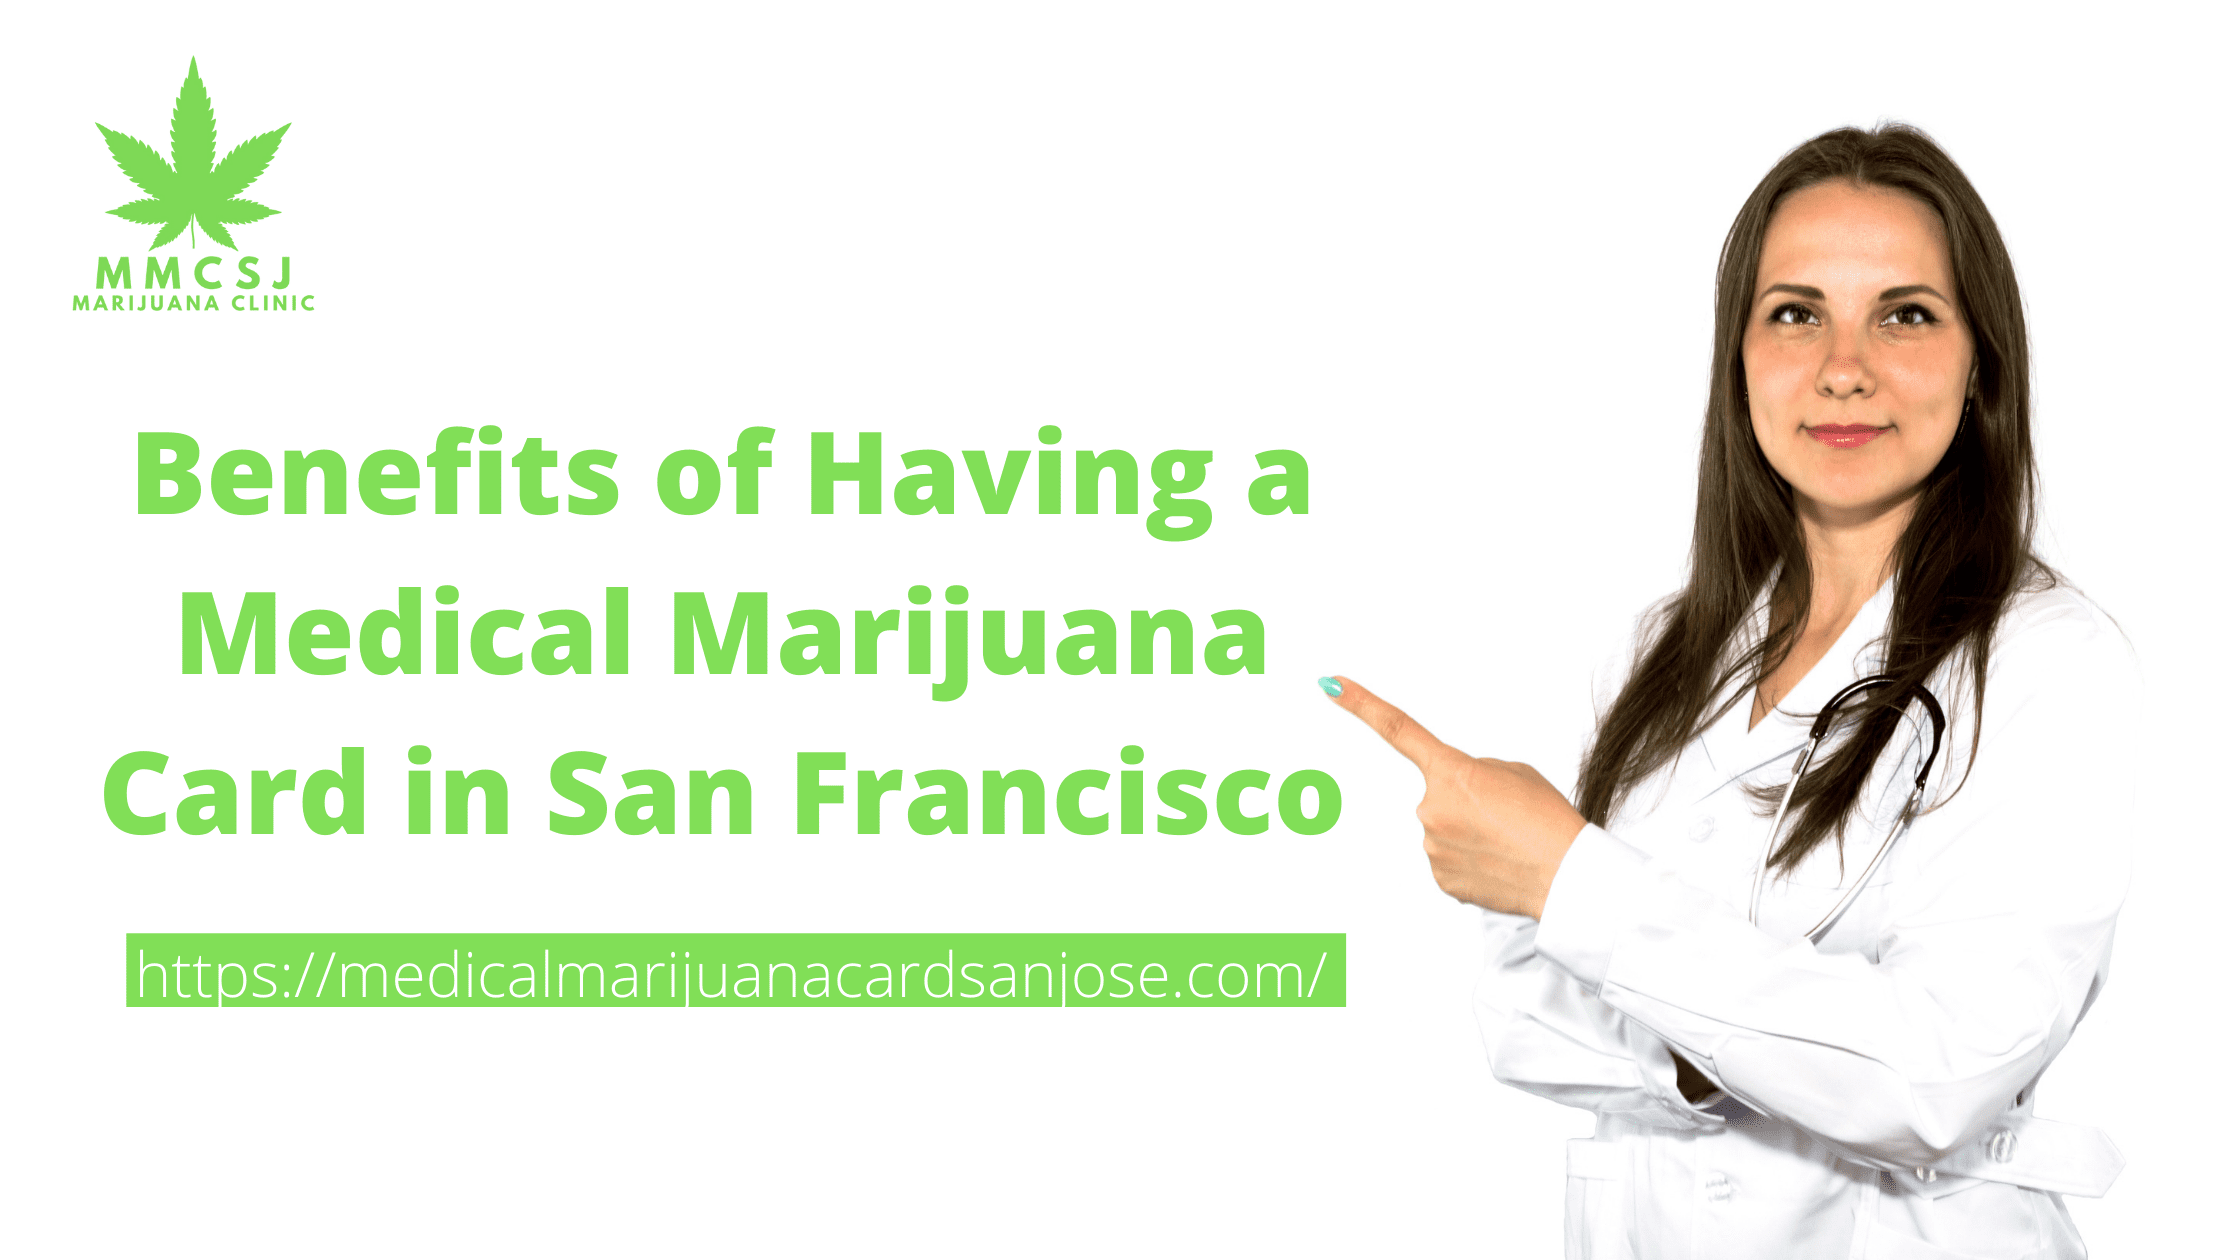 Benefits of Having a Medical Marijuana Card in San Francisco